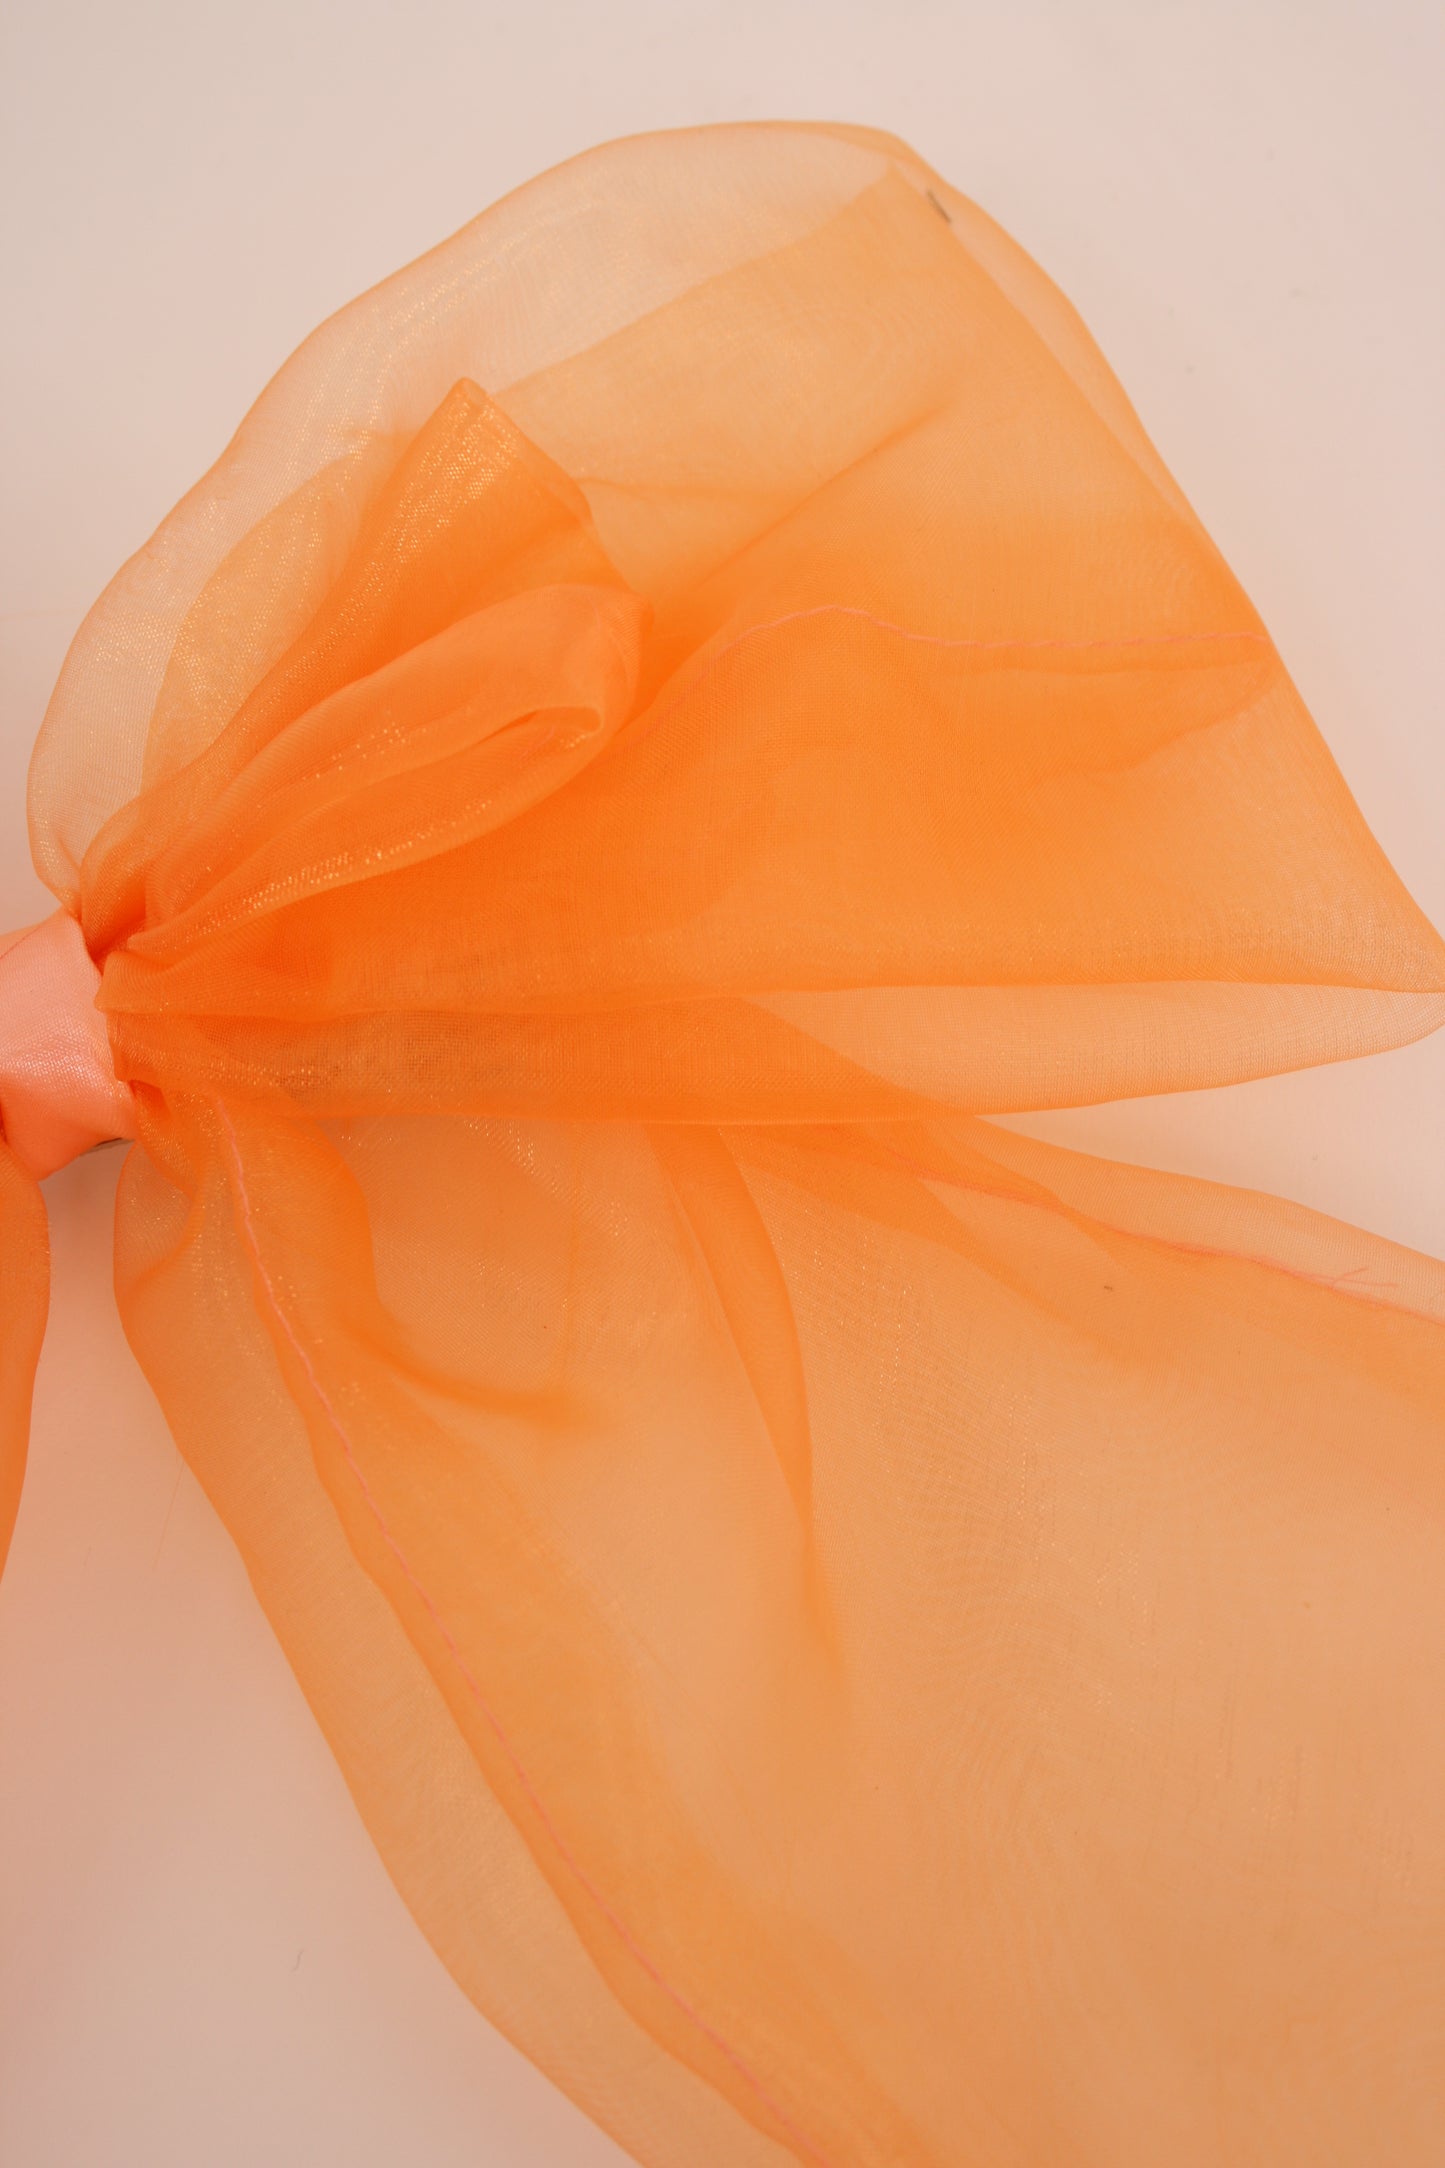 XL OVERSIZED BOW ✿ in Luxe Tangerine Orange Organza